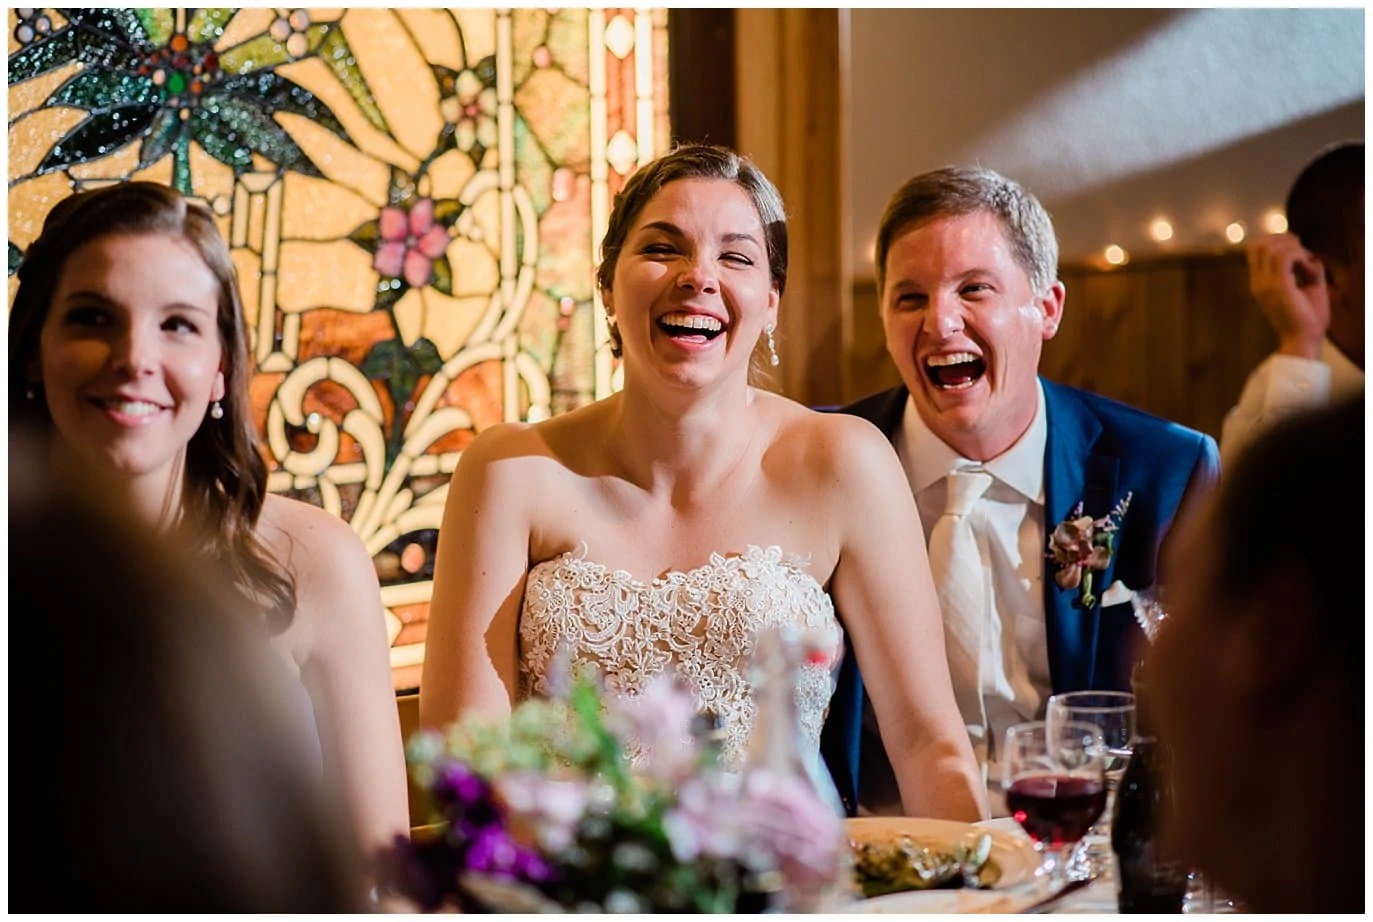 funny toasts at wedding reception photo